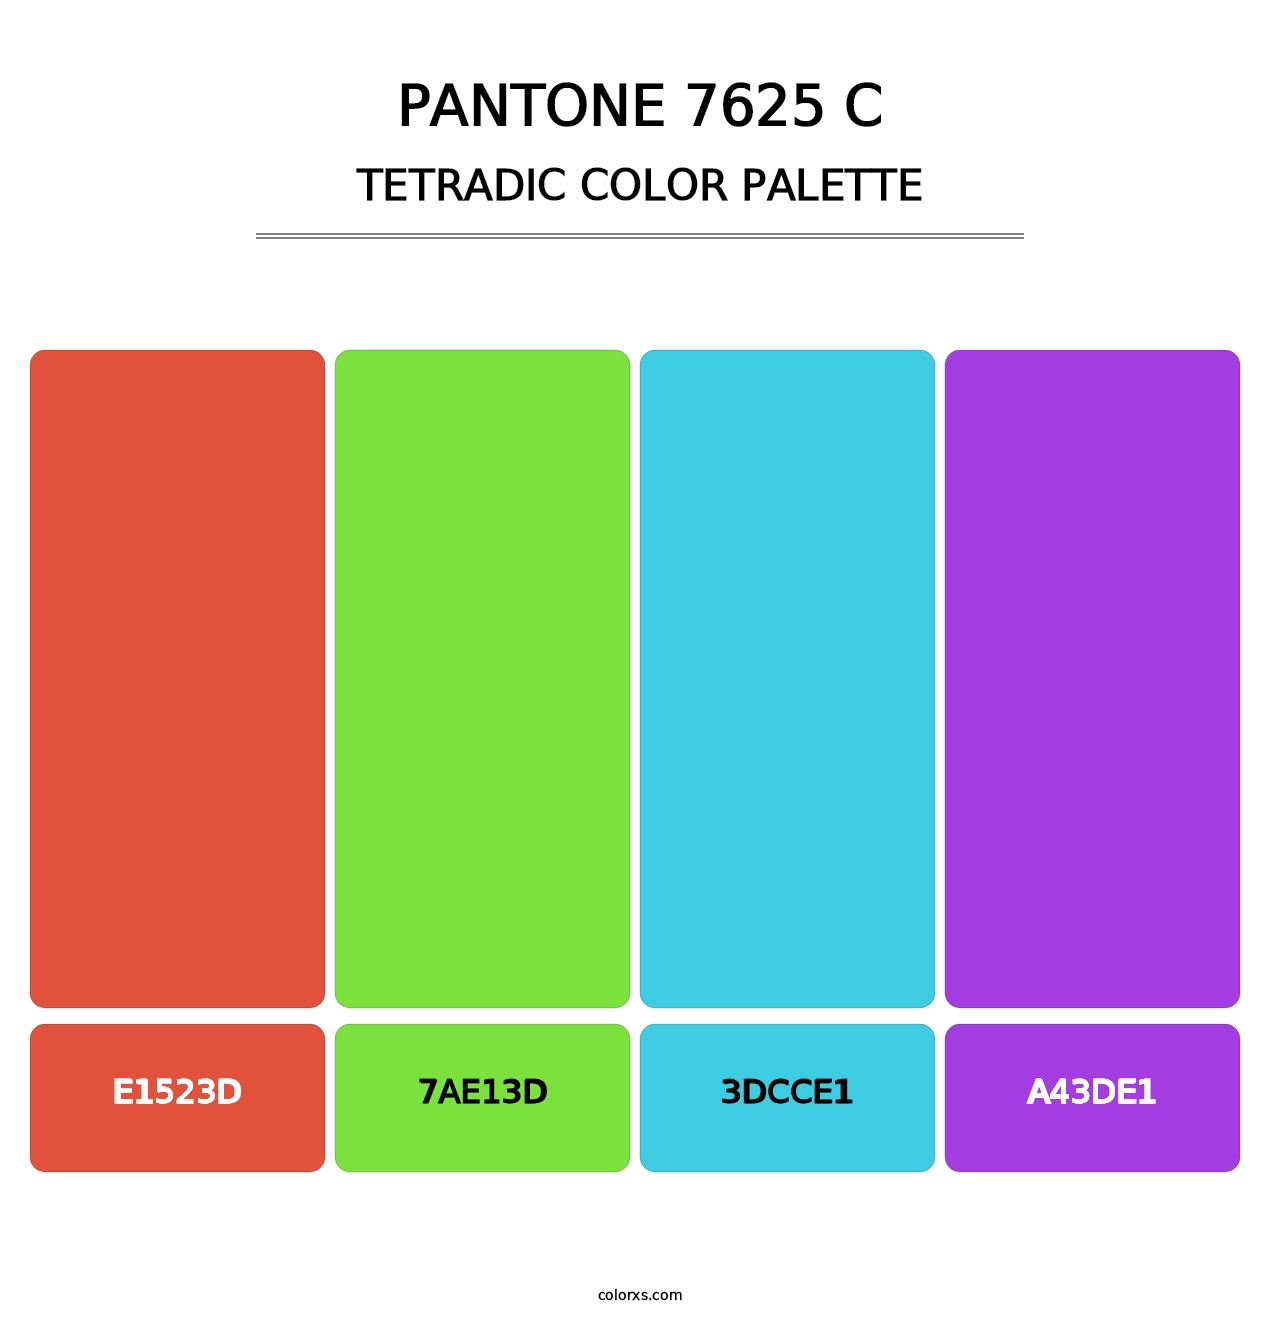 PANTONE 7625 C - Tetradic Color Palette